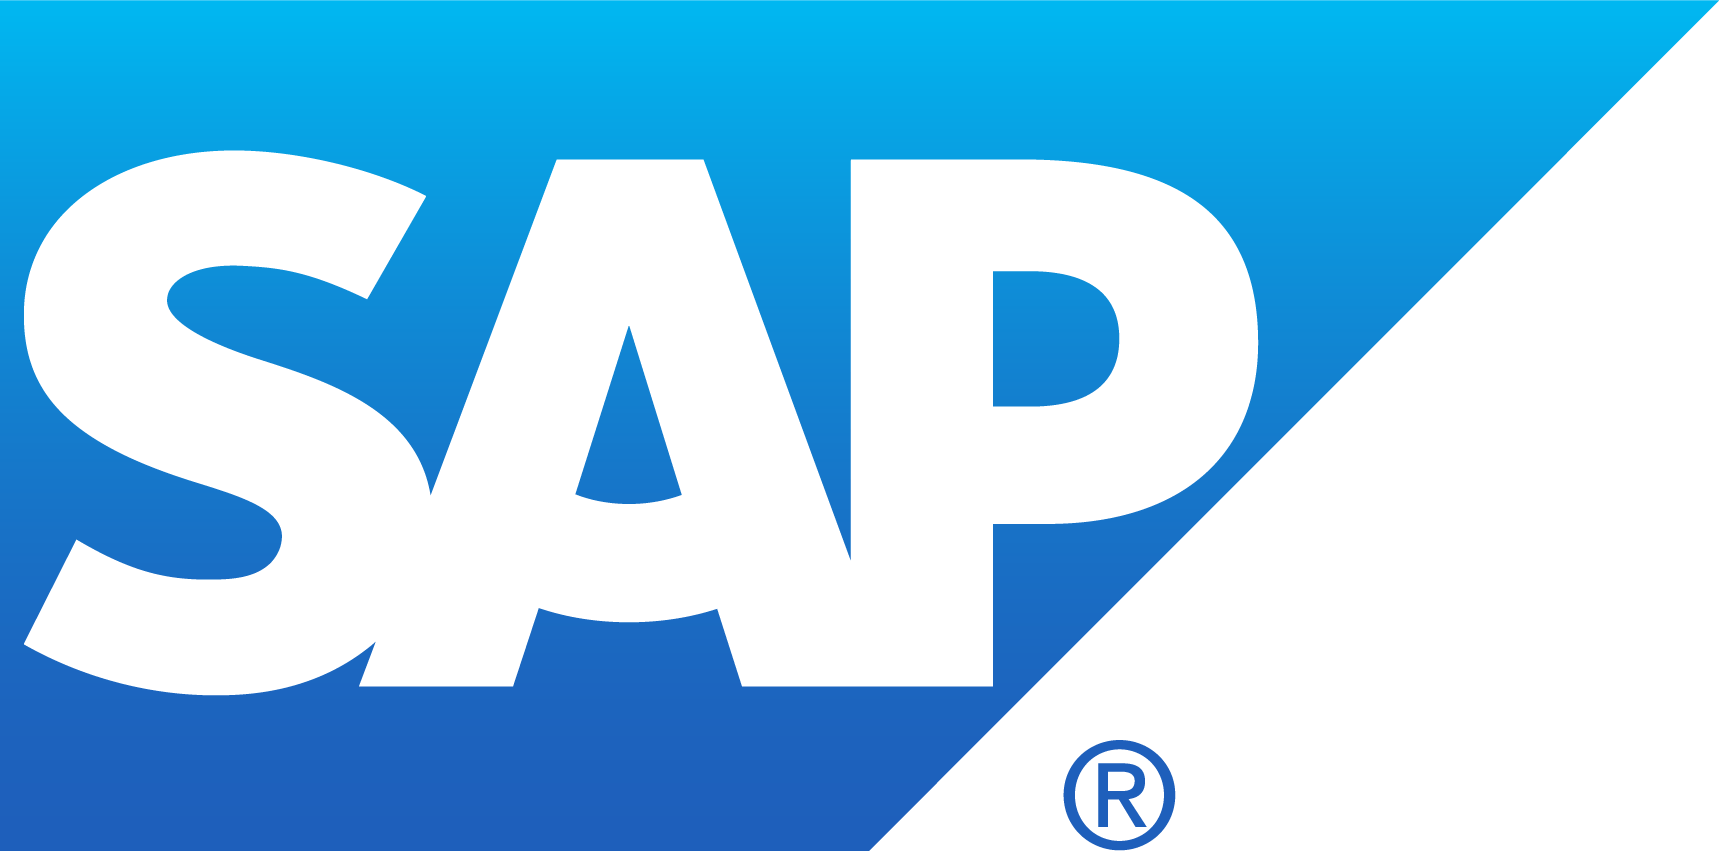 SAP Corporate Logo - SAP-Logo-transparent-bkgrd - Secure 24